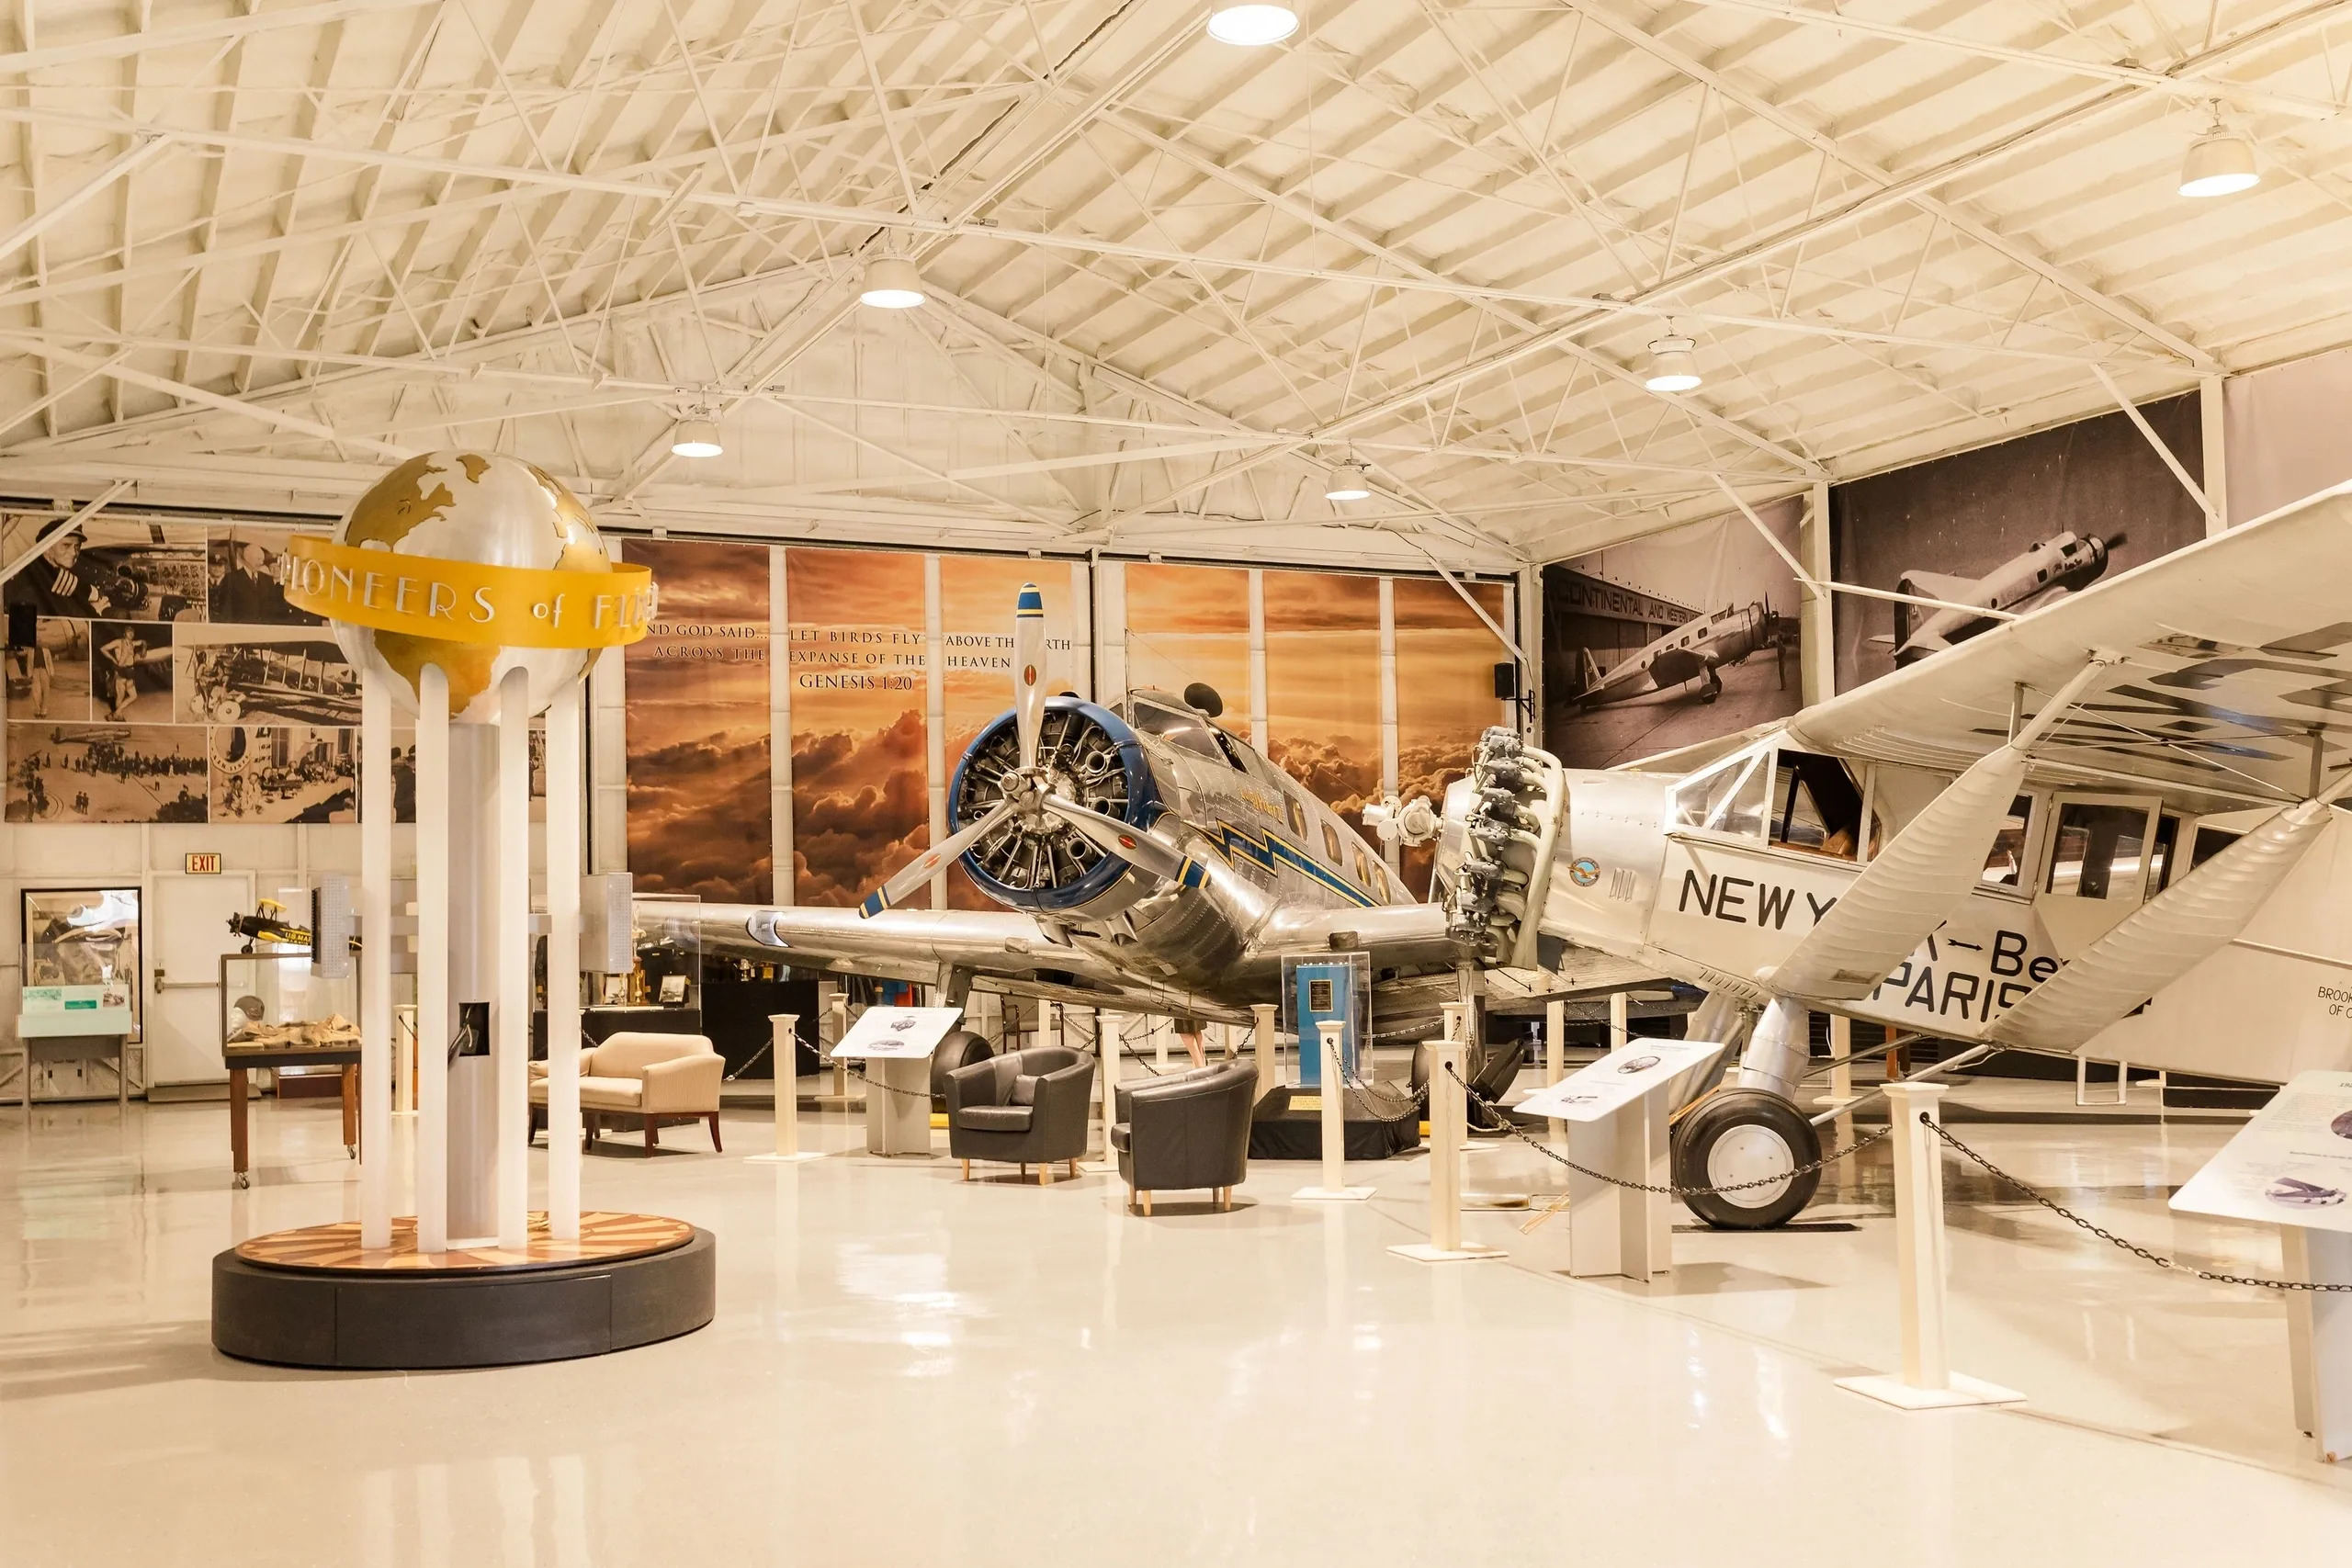 shannon aviation museum